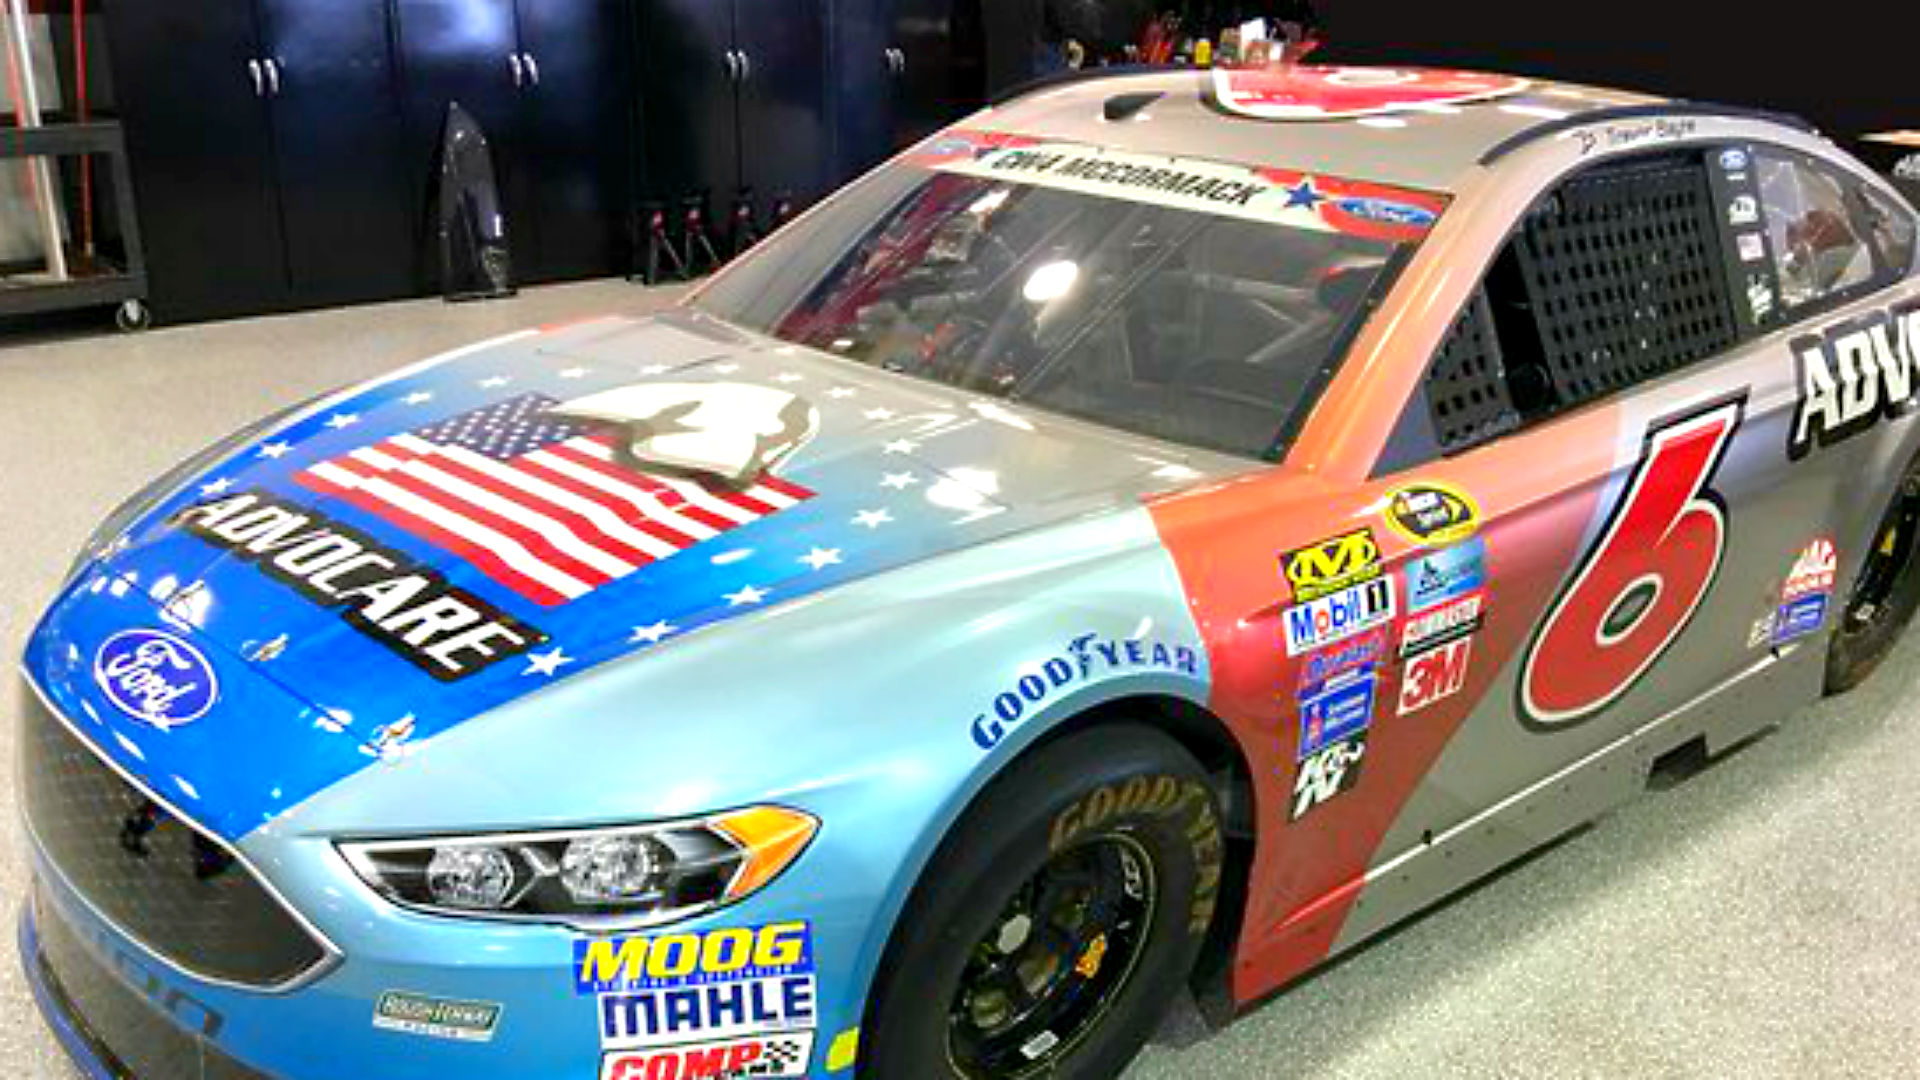 True colors NASCAR puts patriotic display on track at Memorial Day